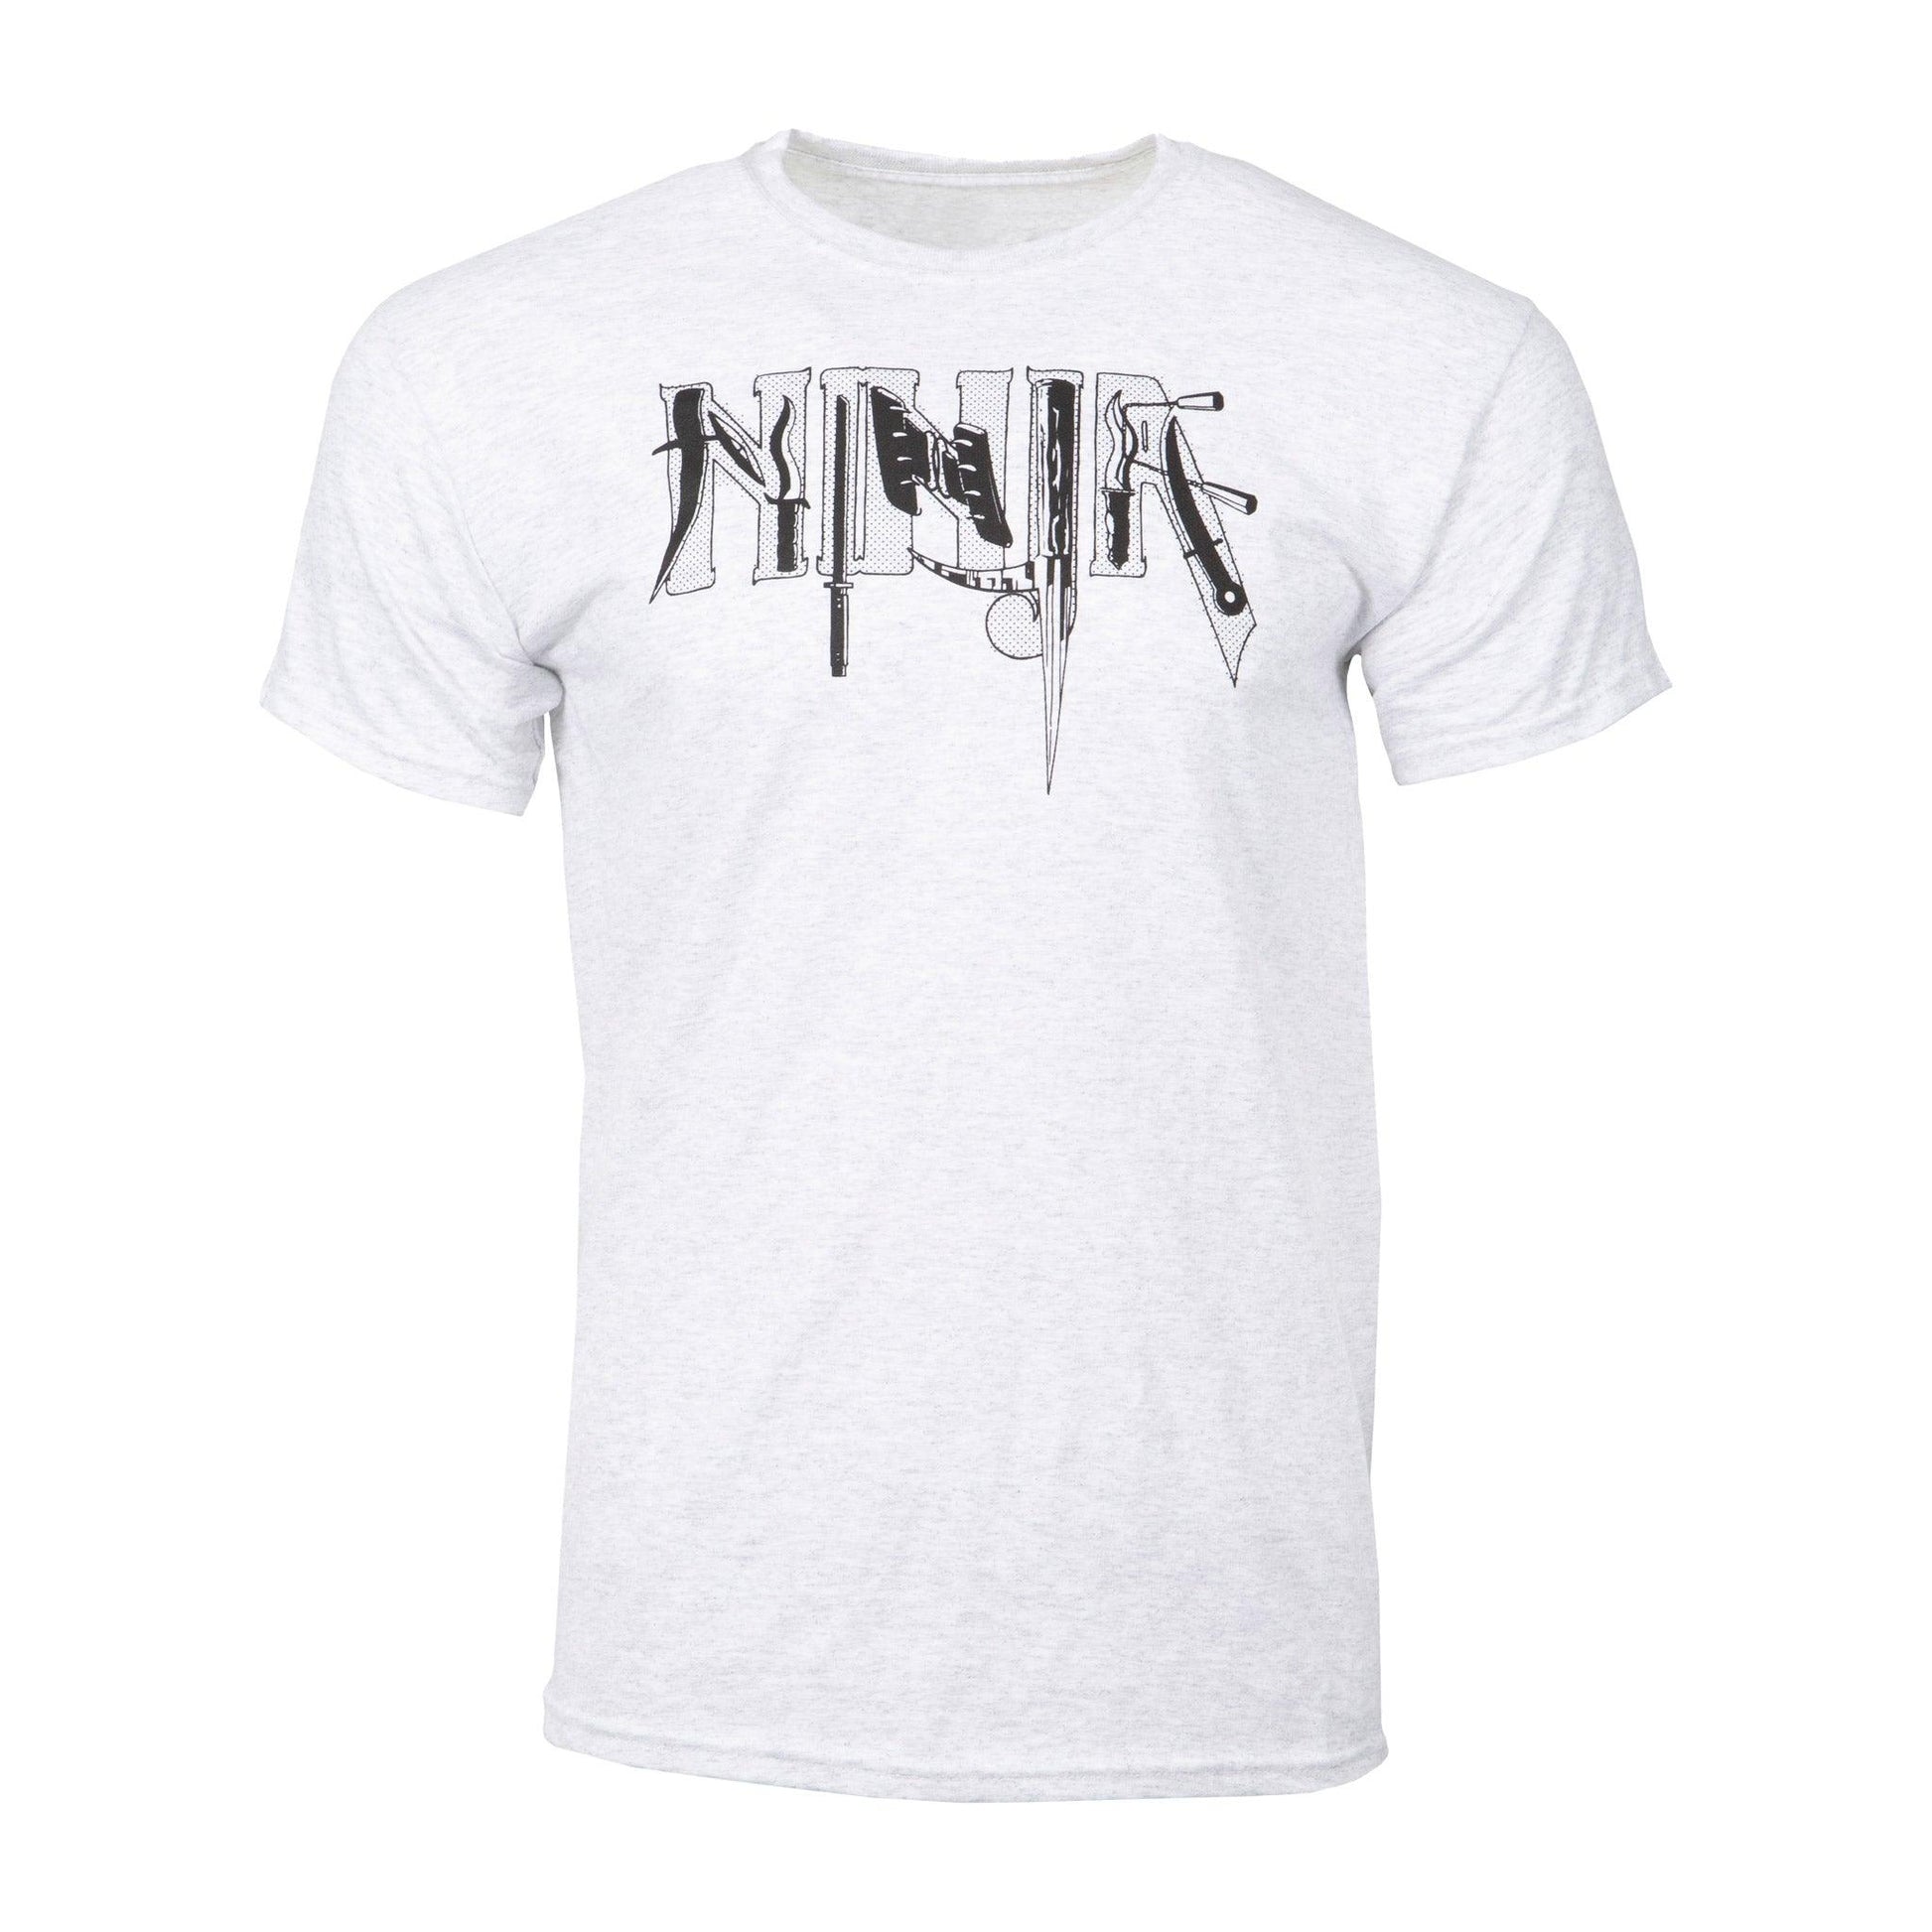 Ninja Weapons T-Shirt - Violent Art Shop